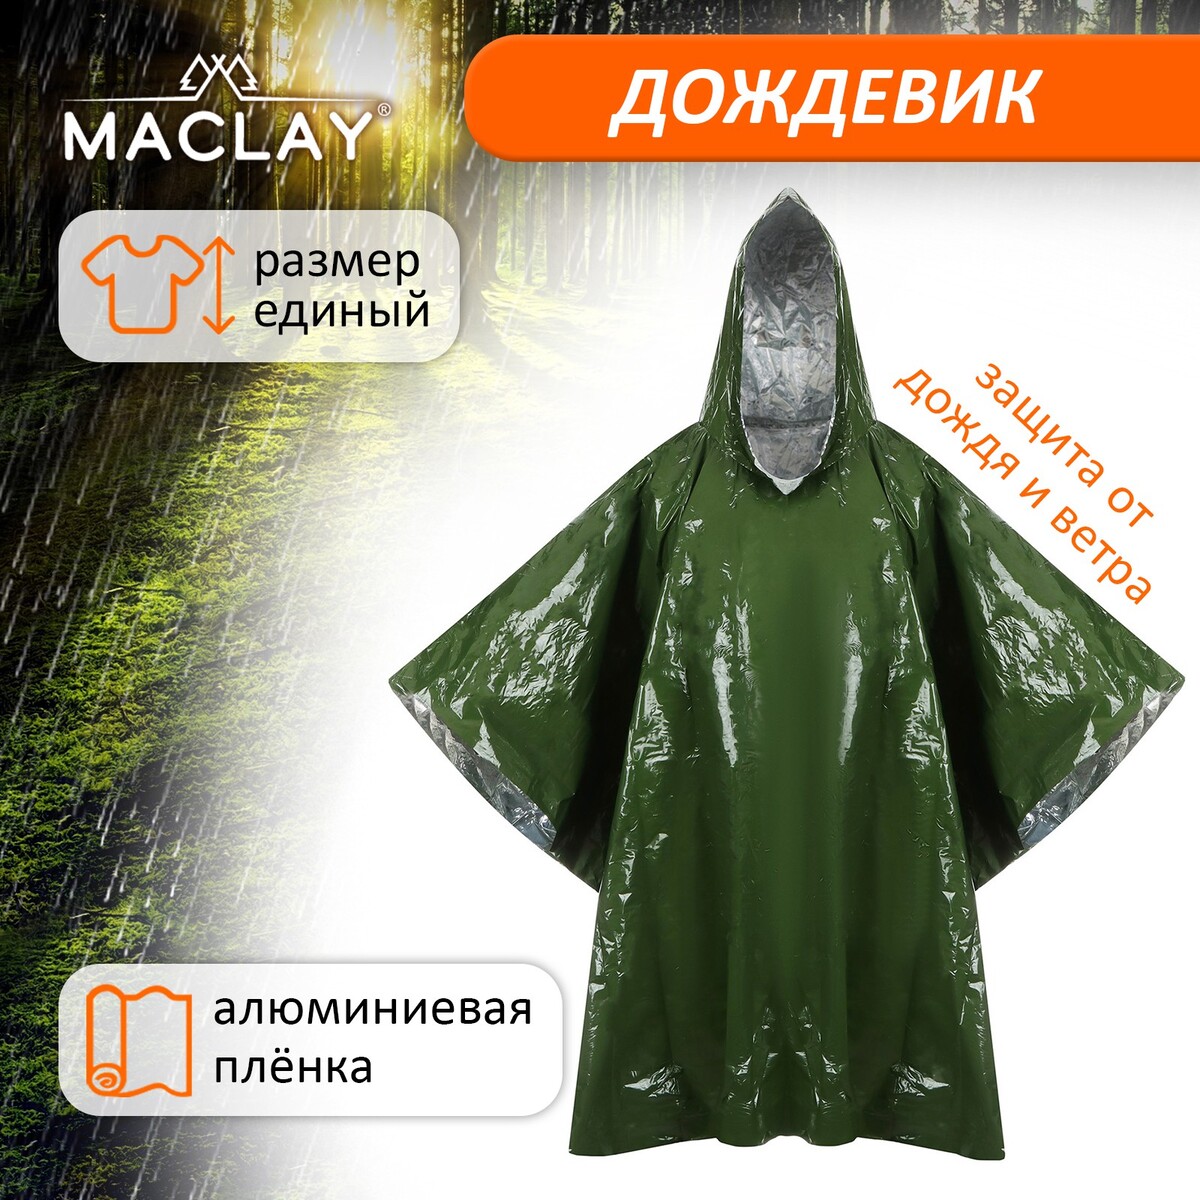 Дождевик maclay, фольгированный, 100х125 см, цвет хаки Maclay